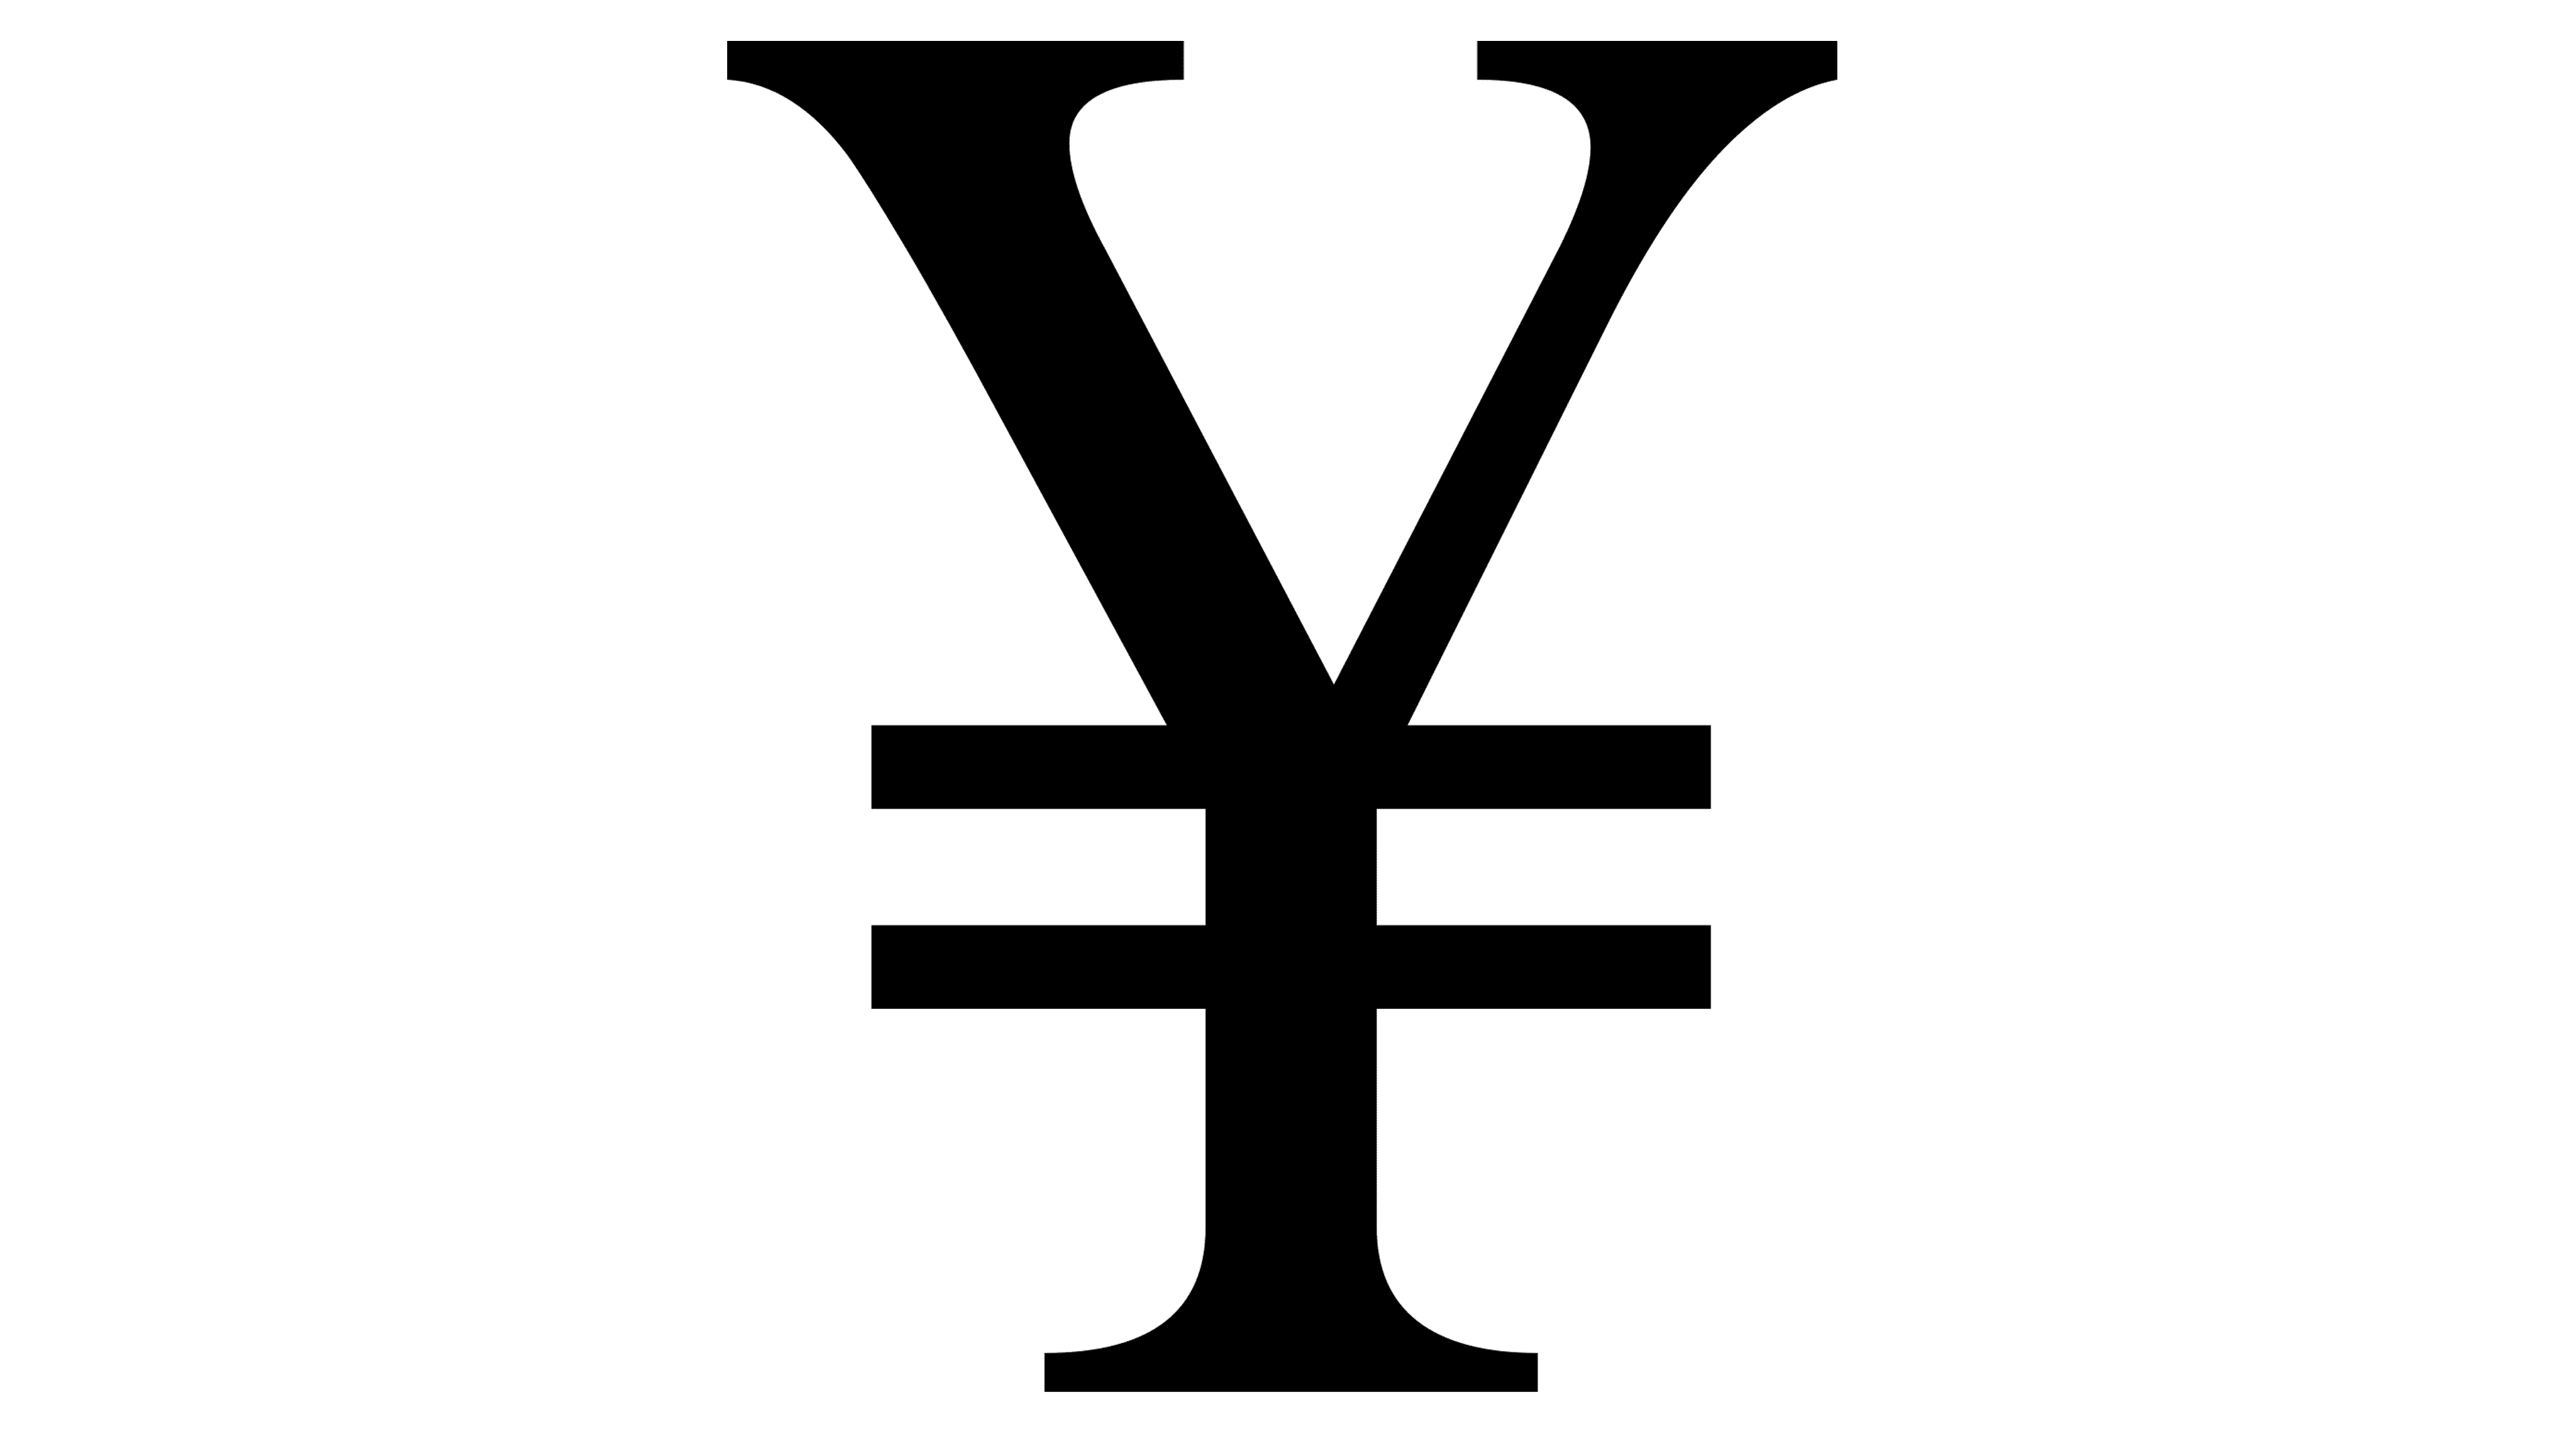 Japanese Yen Symbol